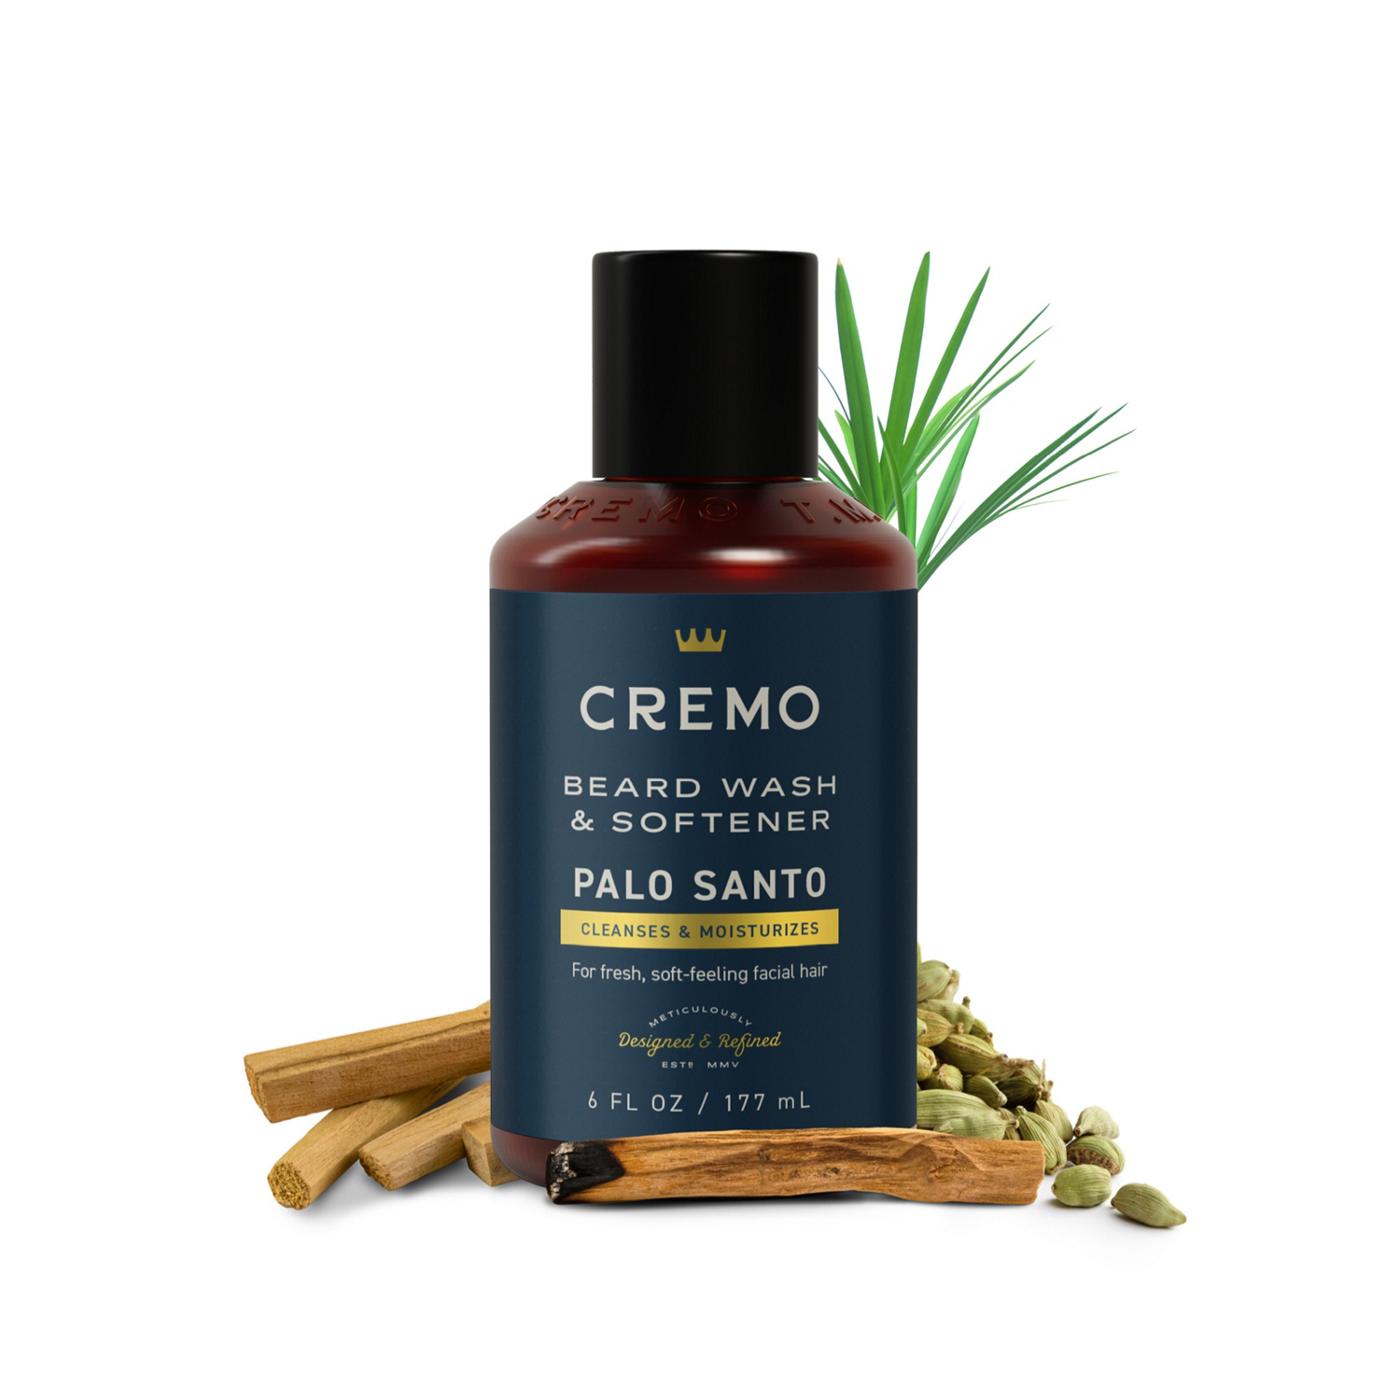 Cremo Beard Wash & Softener Palo Santo; image 4 of 7